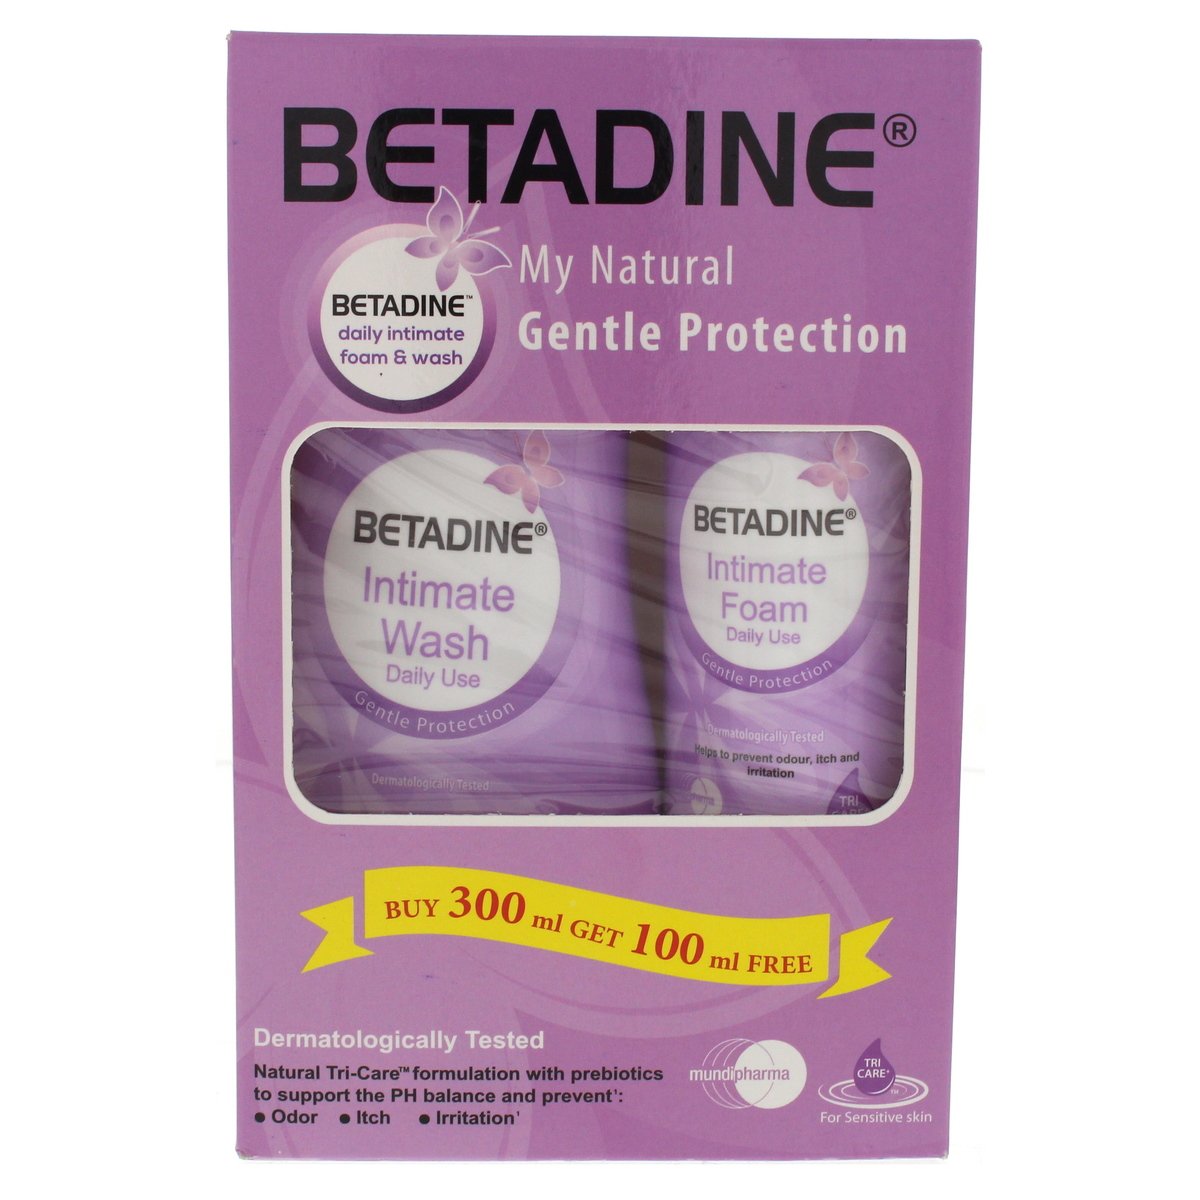 Betadine Natural Gentle Prtection Intimate Wash 300ml + Intimate Foam100ml